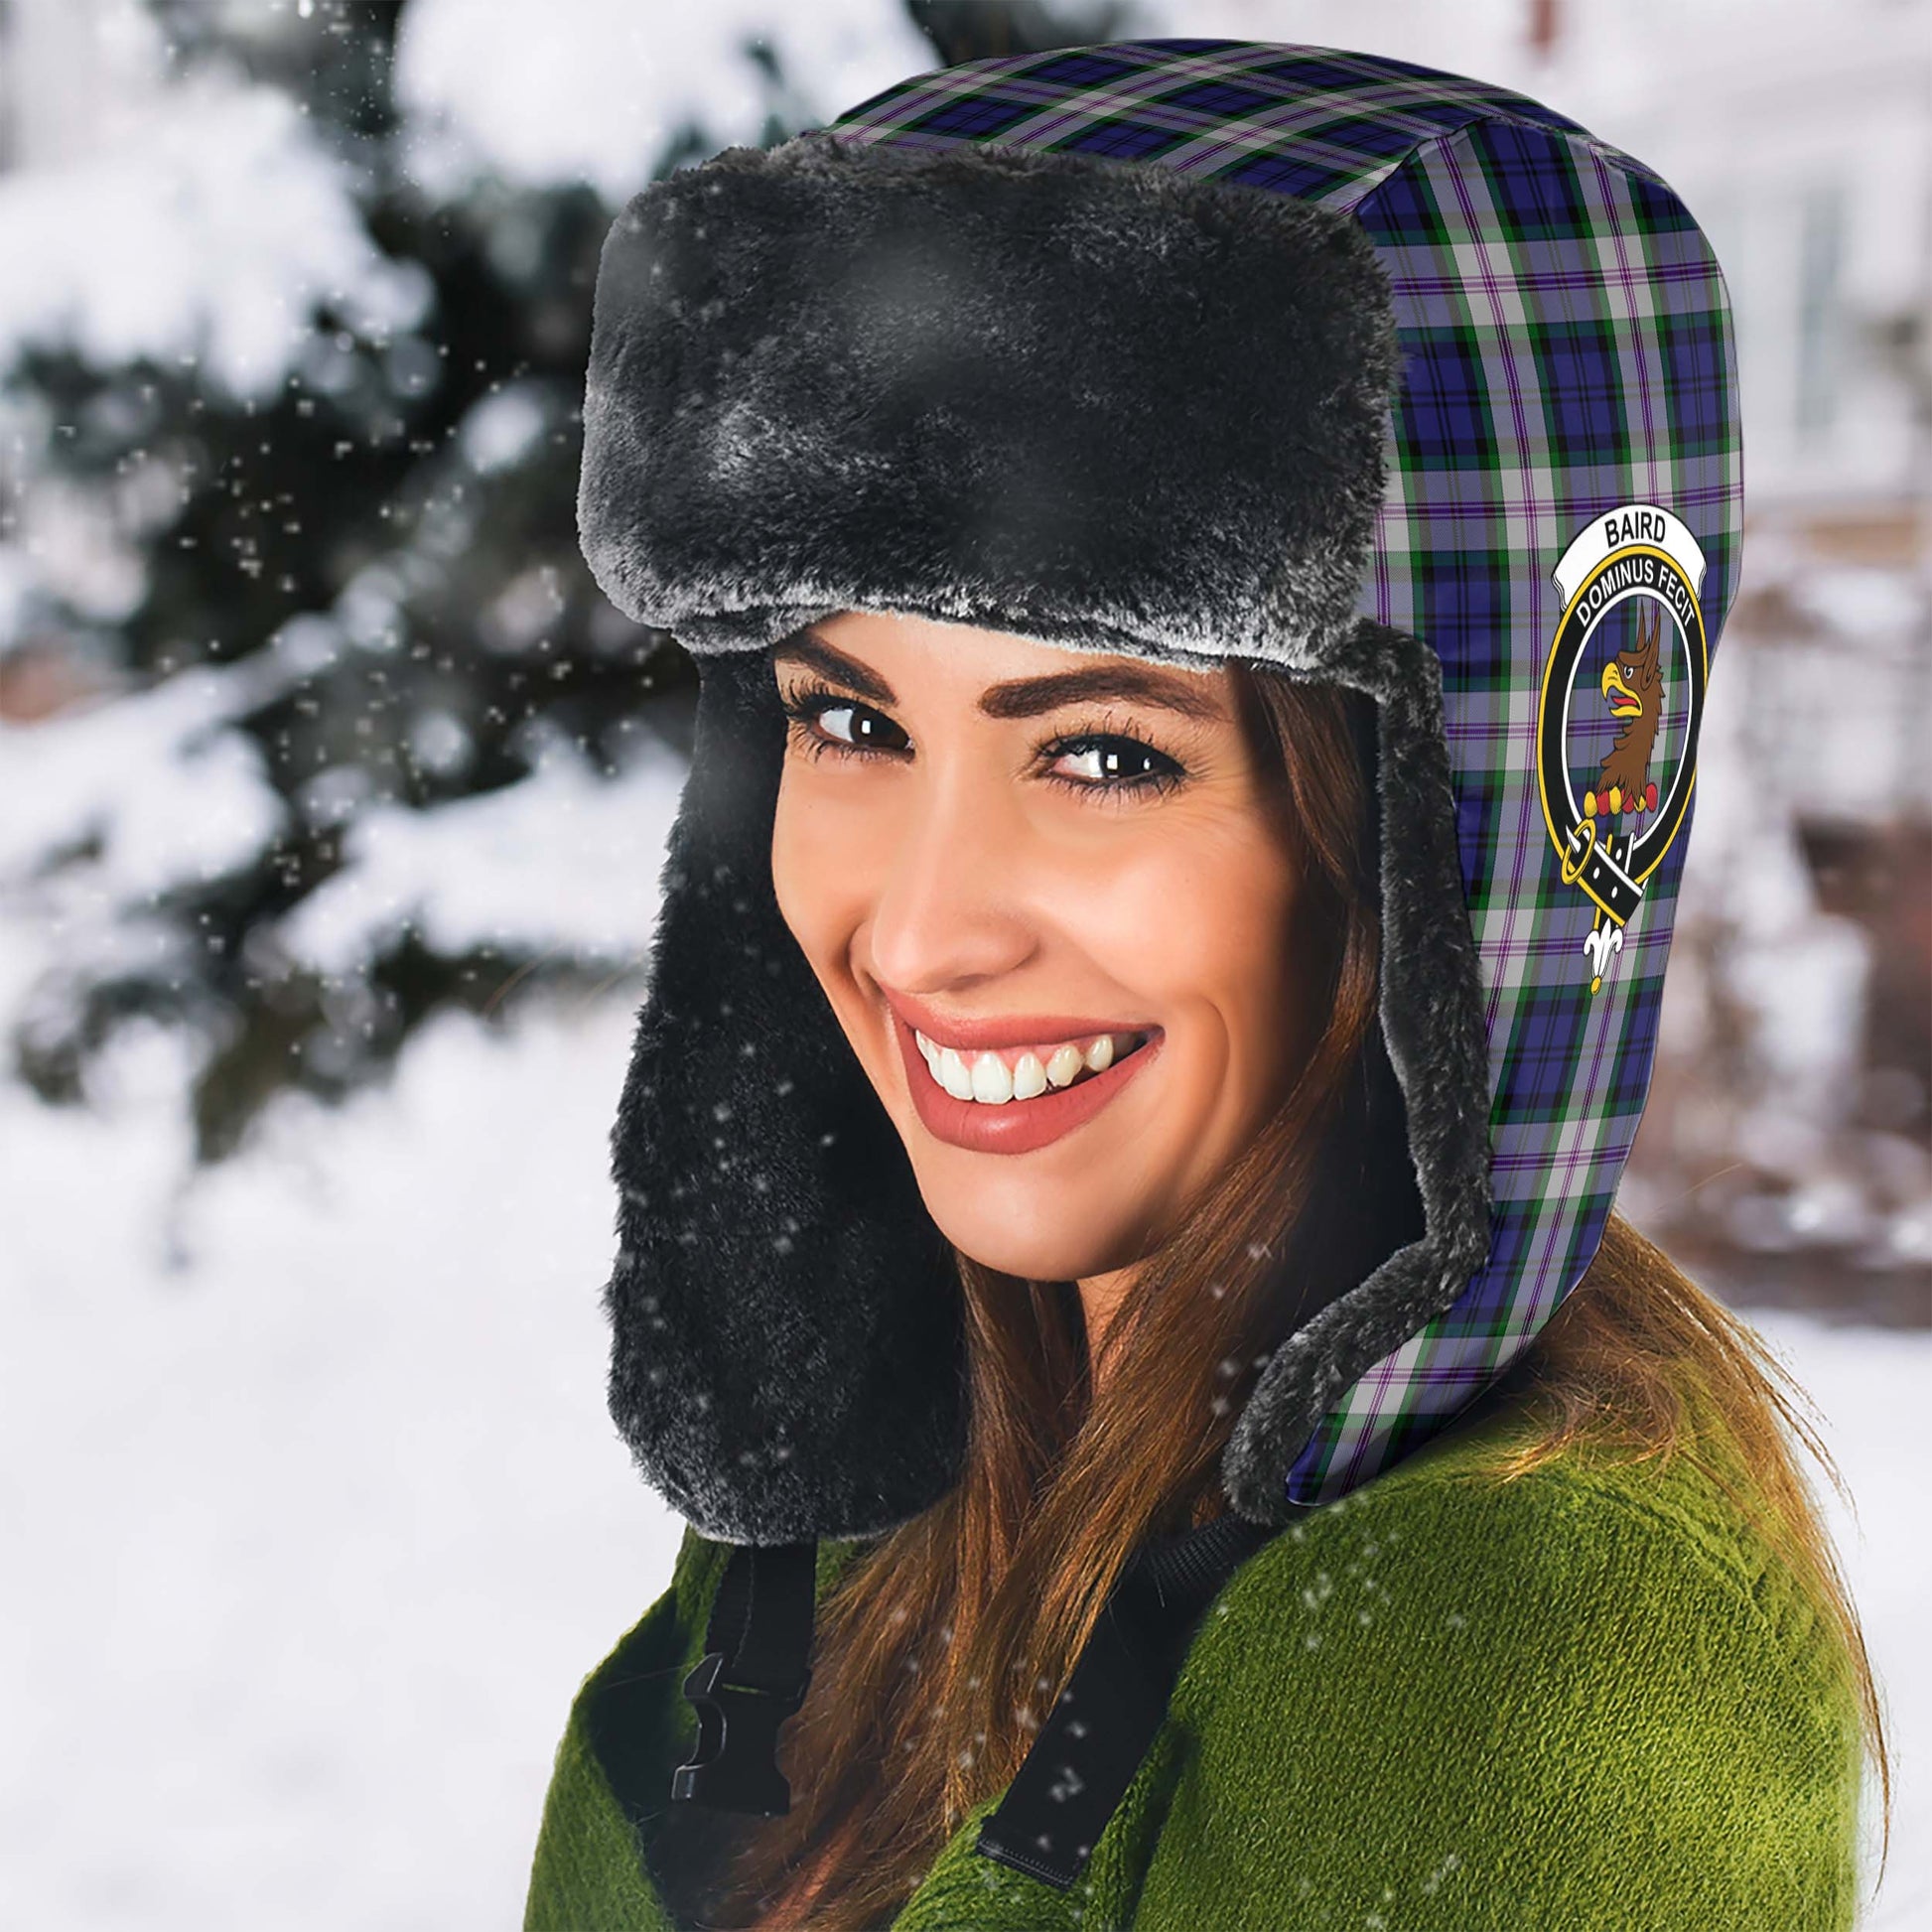 Baird Dress Tartan Winter Trapper Hat with Family Crest - Tartanvibesclothing